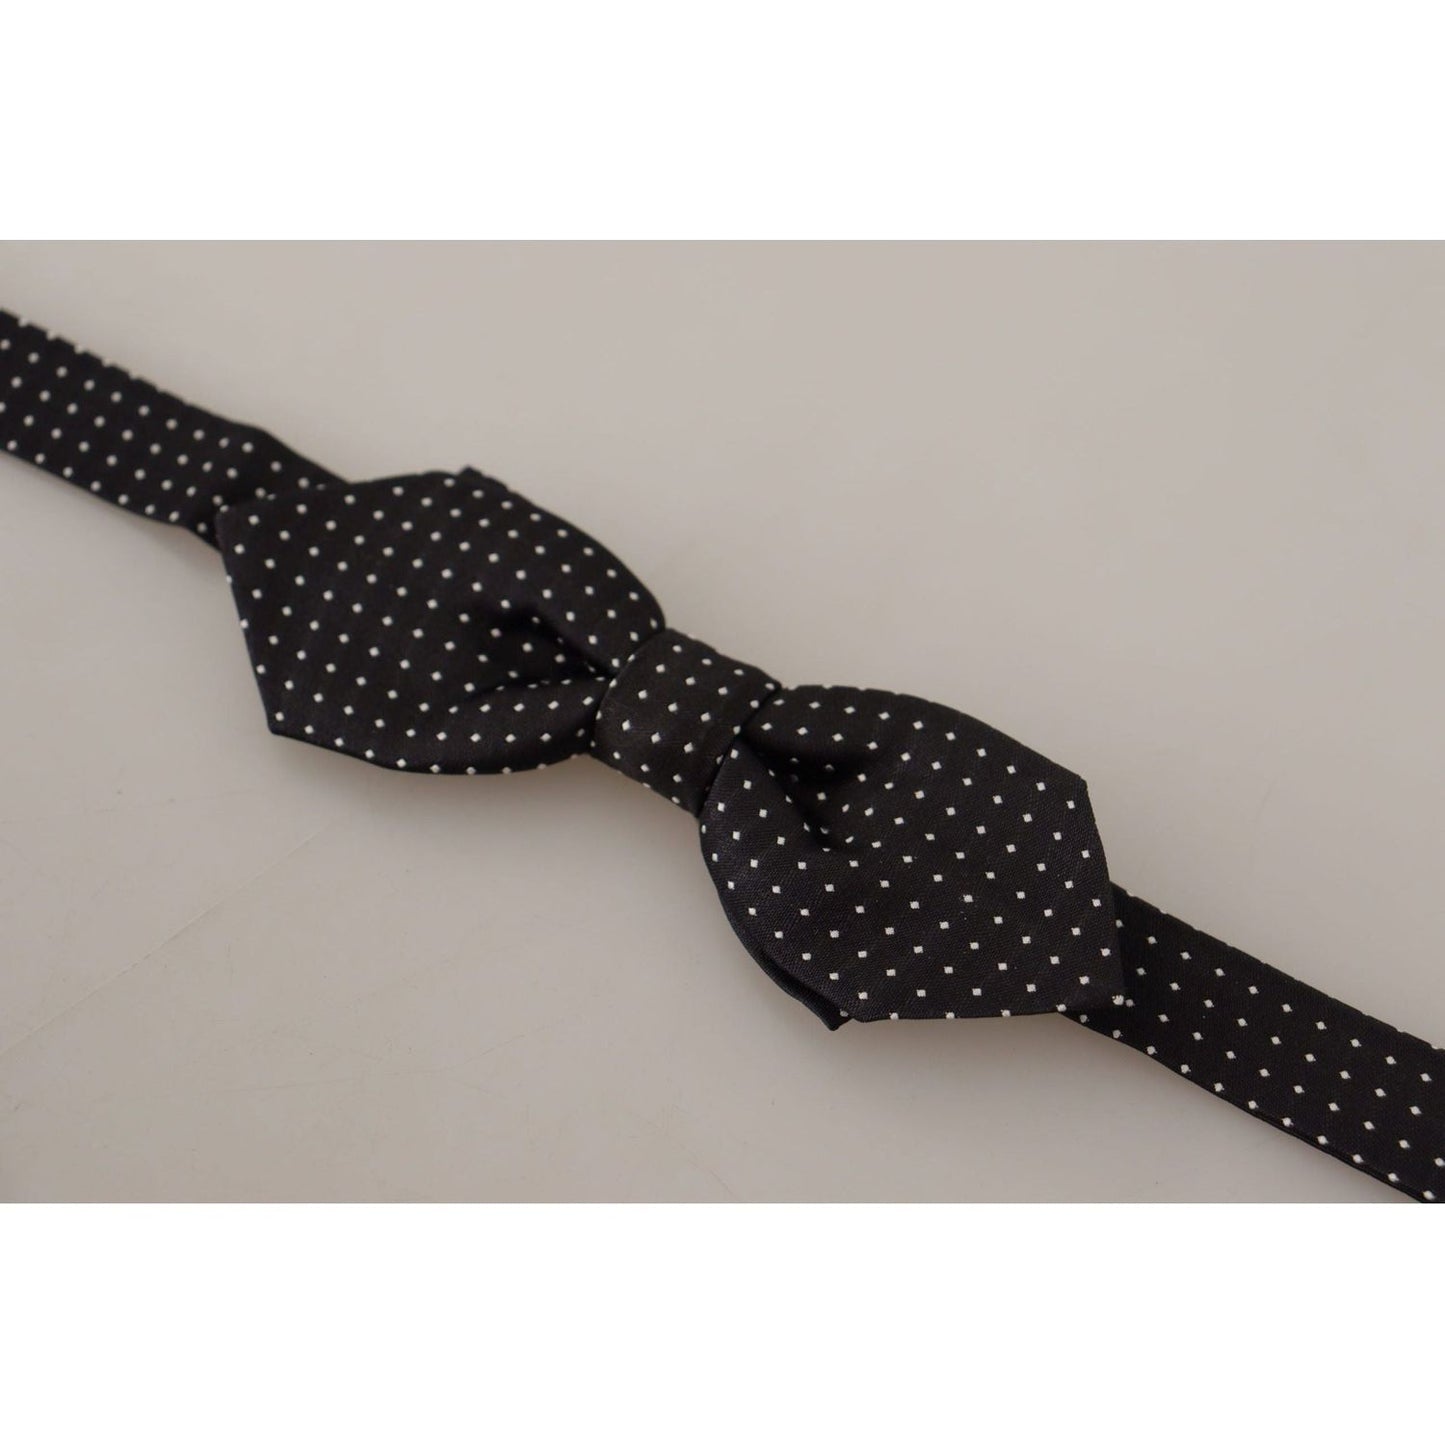 Exquisite Silk Polka Dot Bow Tie